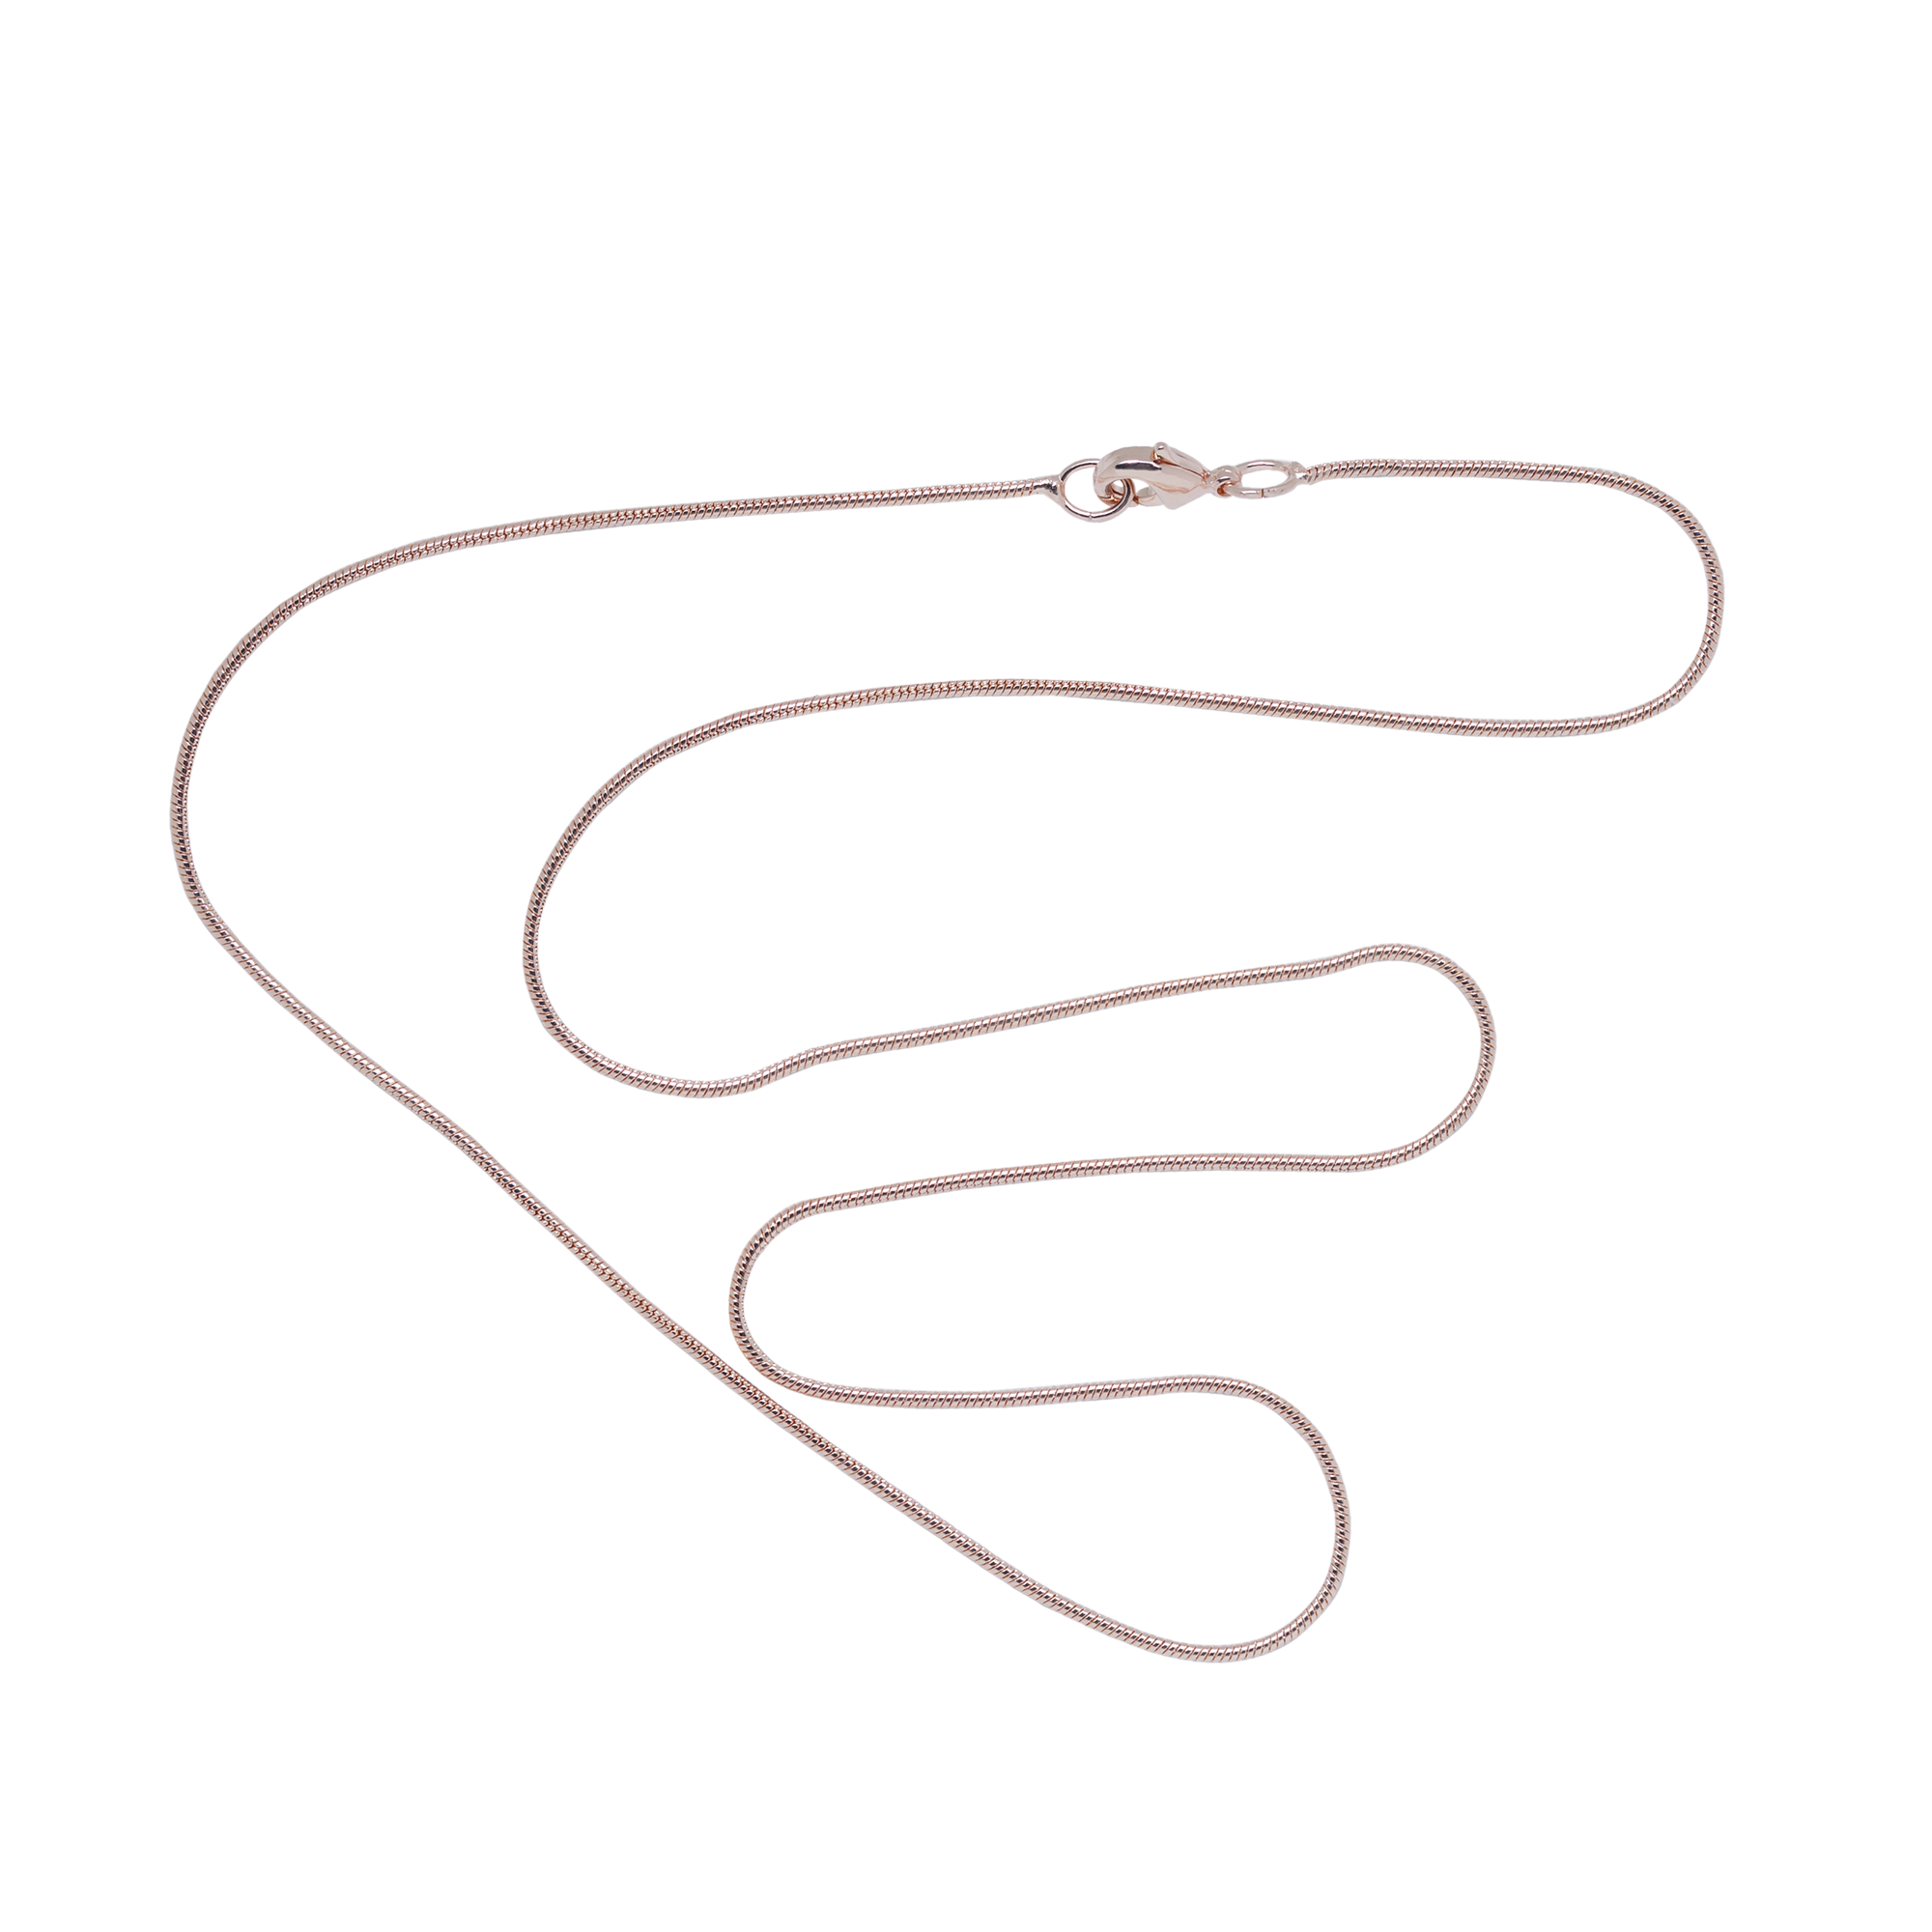 CH.JAK.4001 - 18" Polished Rose Gold Snake Chain